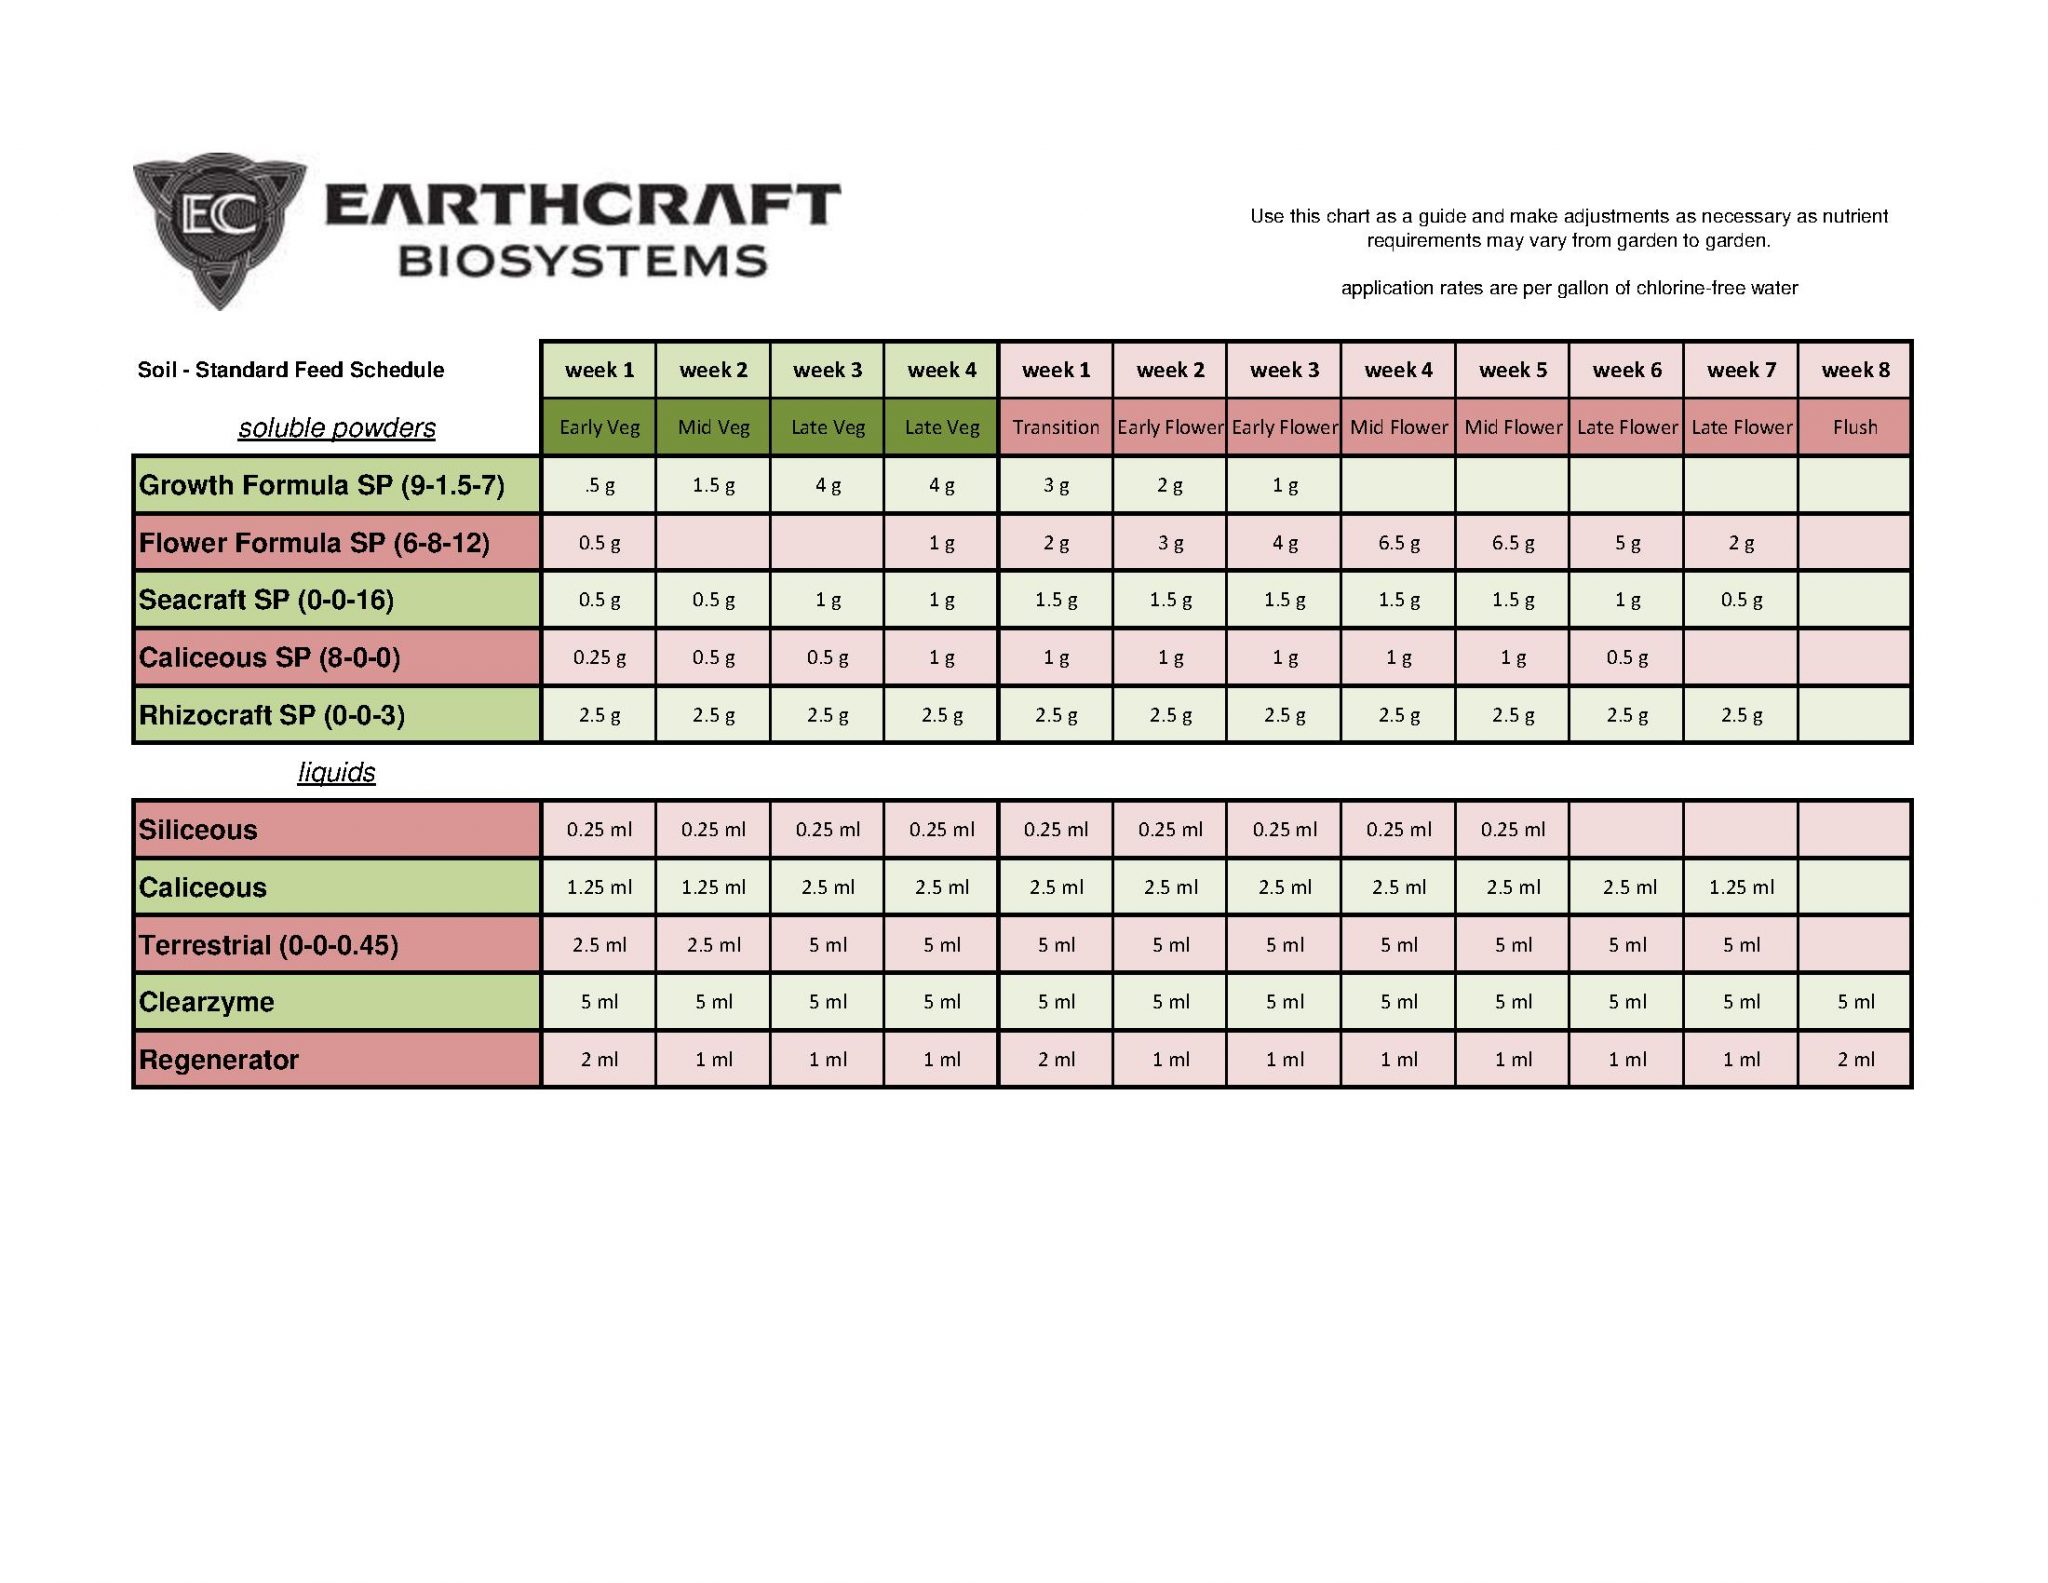 tinywow_Copy of Earthcraft Biosystems Feed Chart - Soil_7647379_1